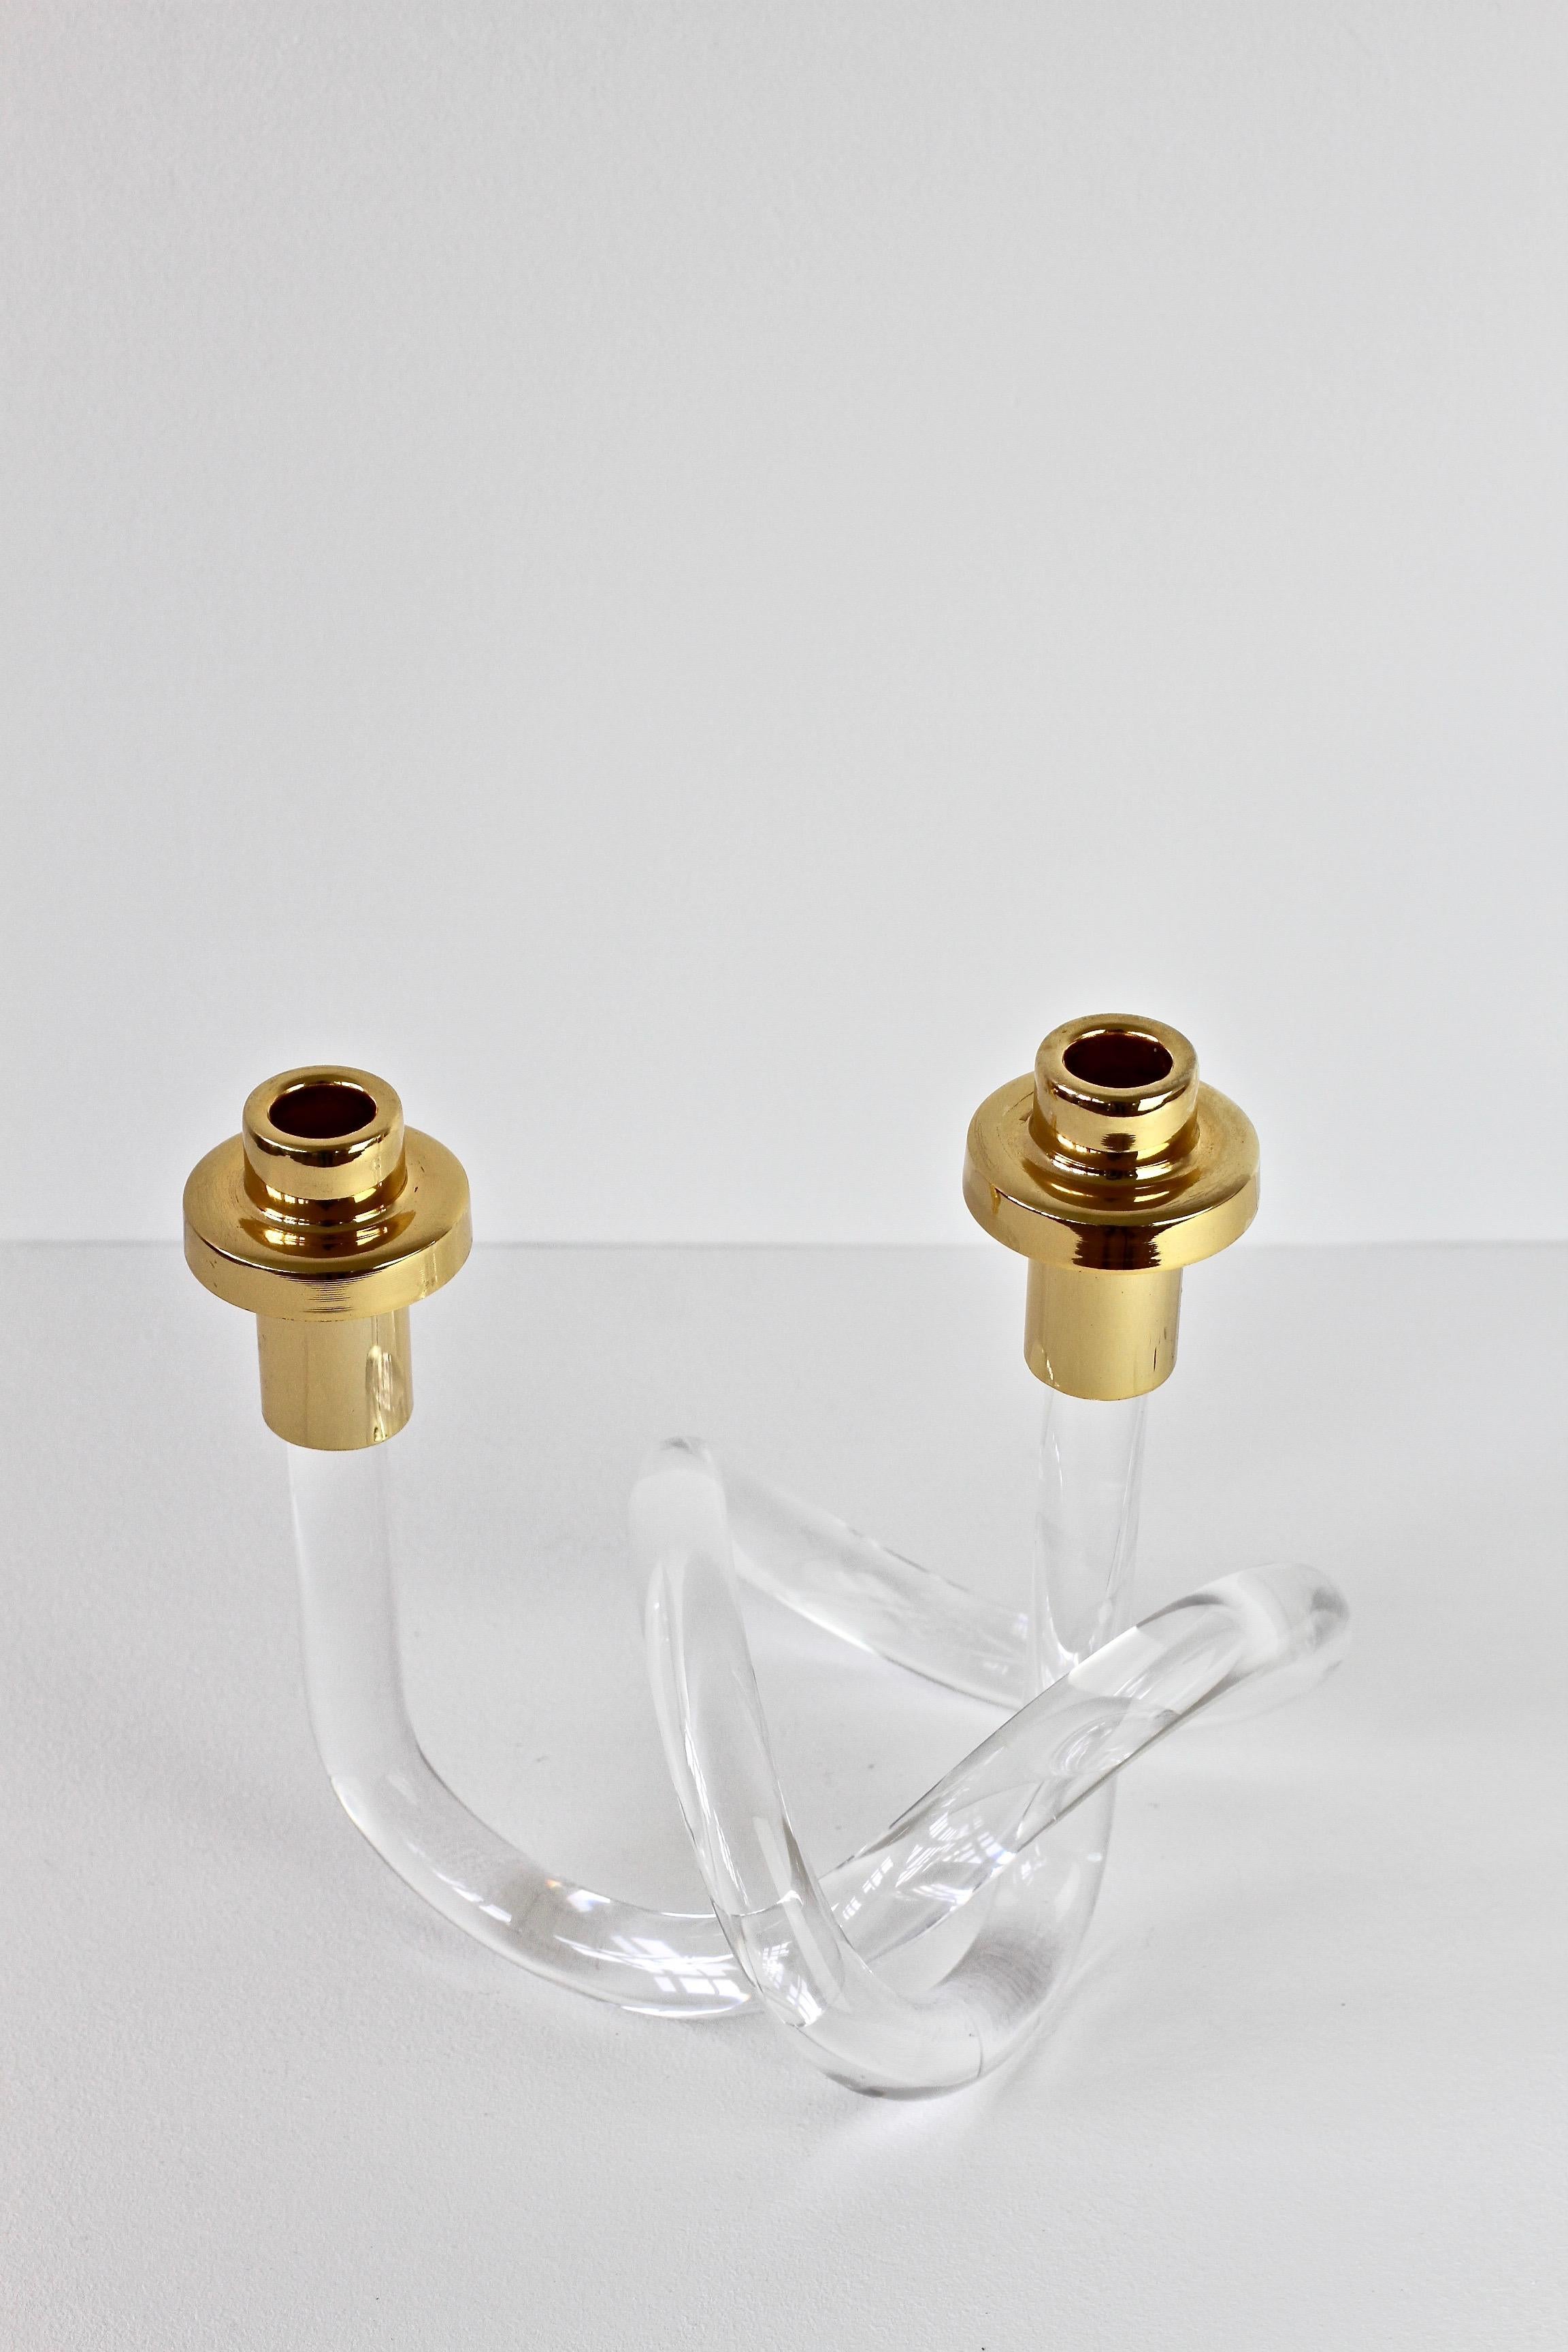 Brass Gold & Lucite Twisted Pretzel Candlestick Holder/Candelabra by Dorothy Thorpe